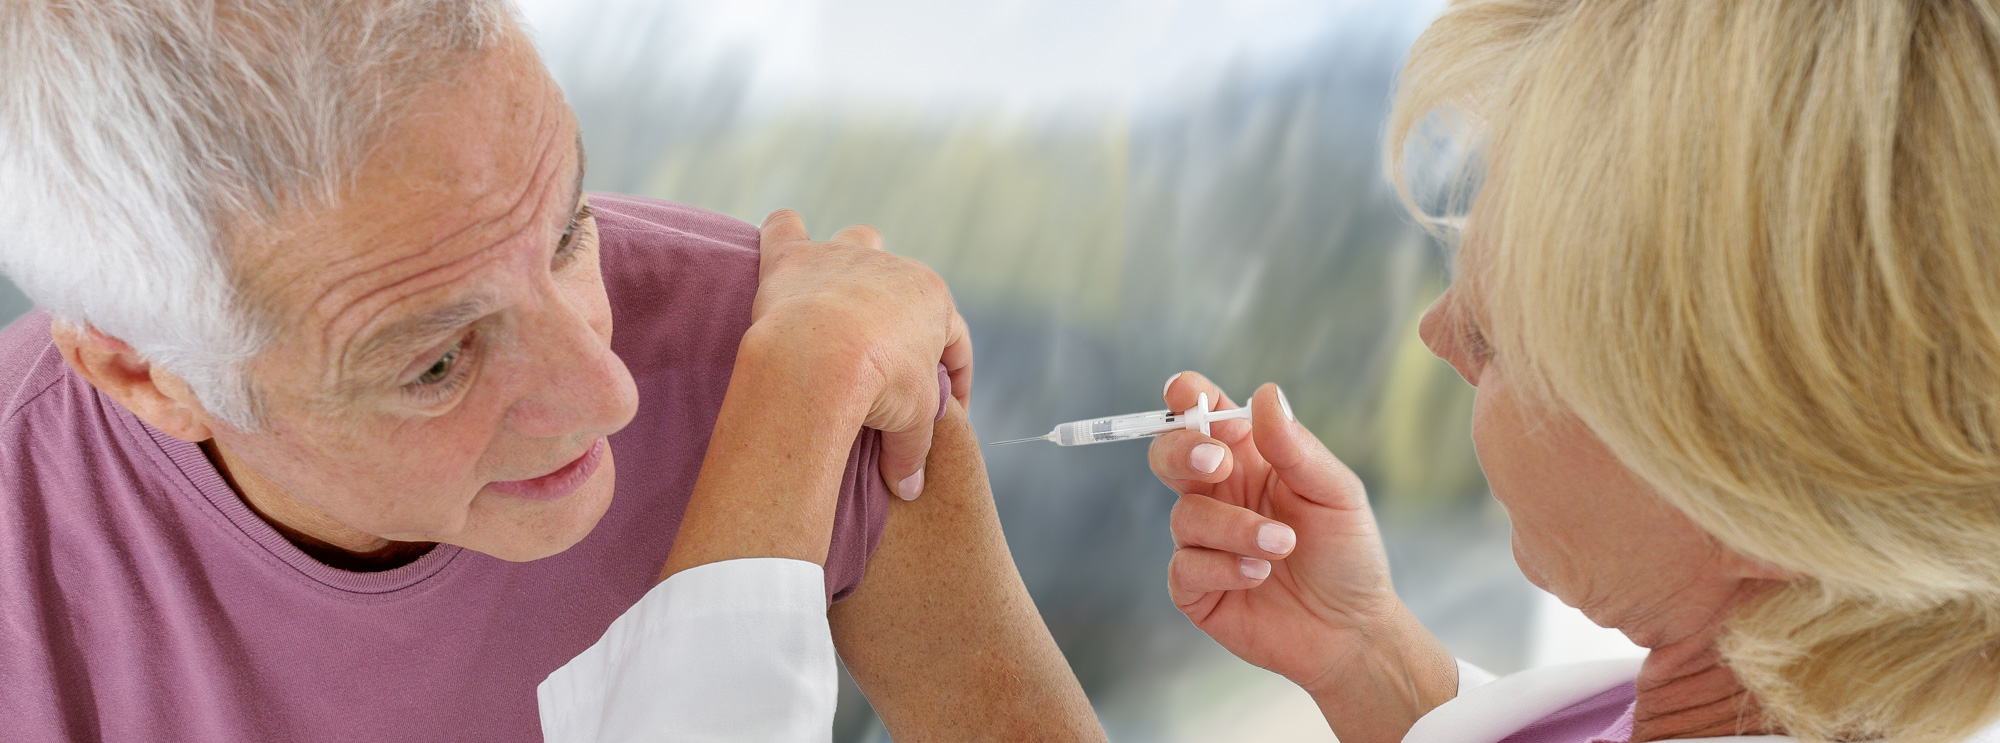 anziani-vaccini-influenza-consigli